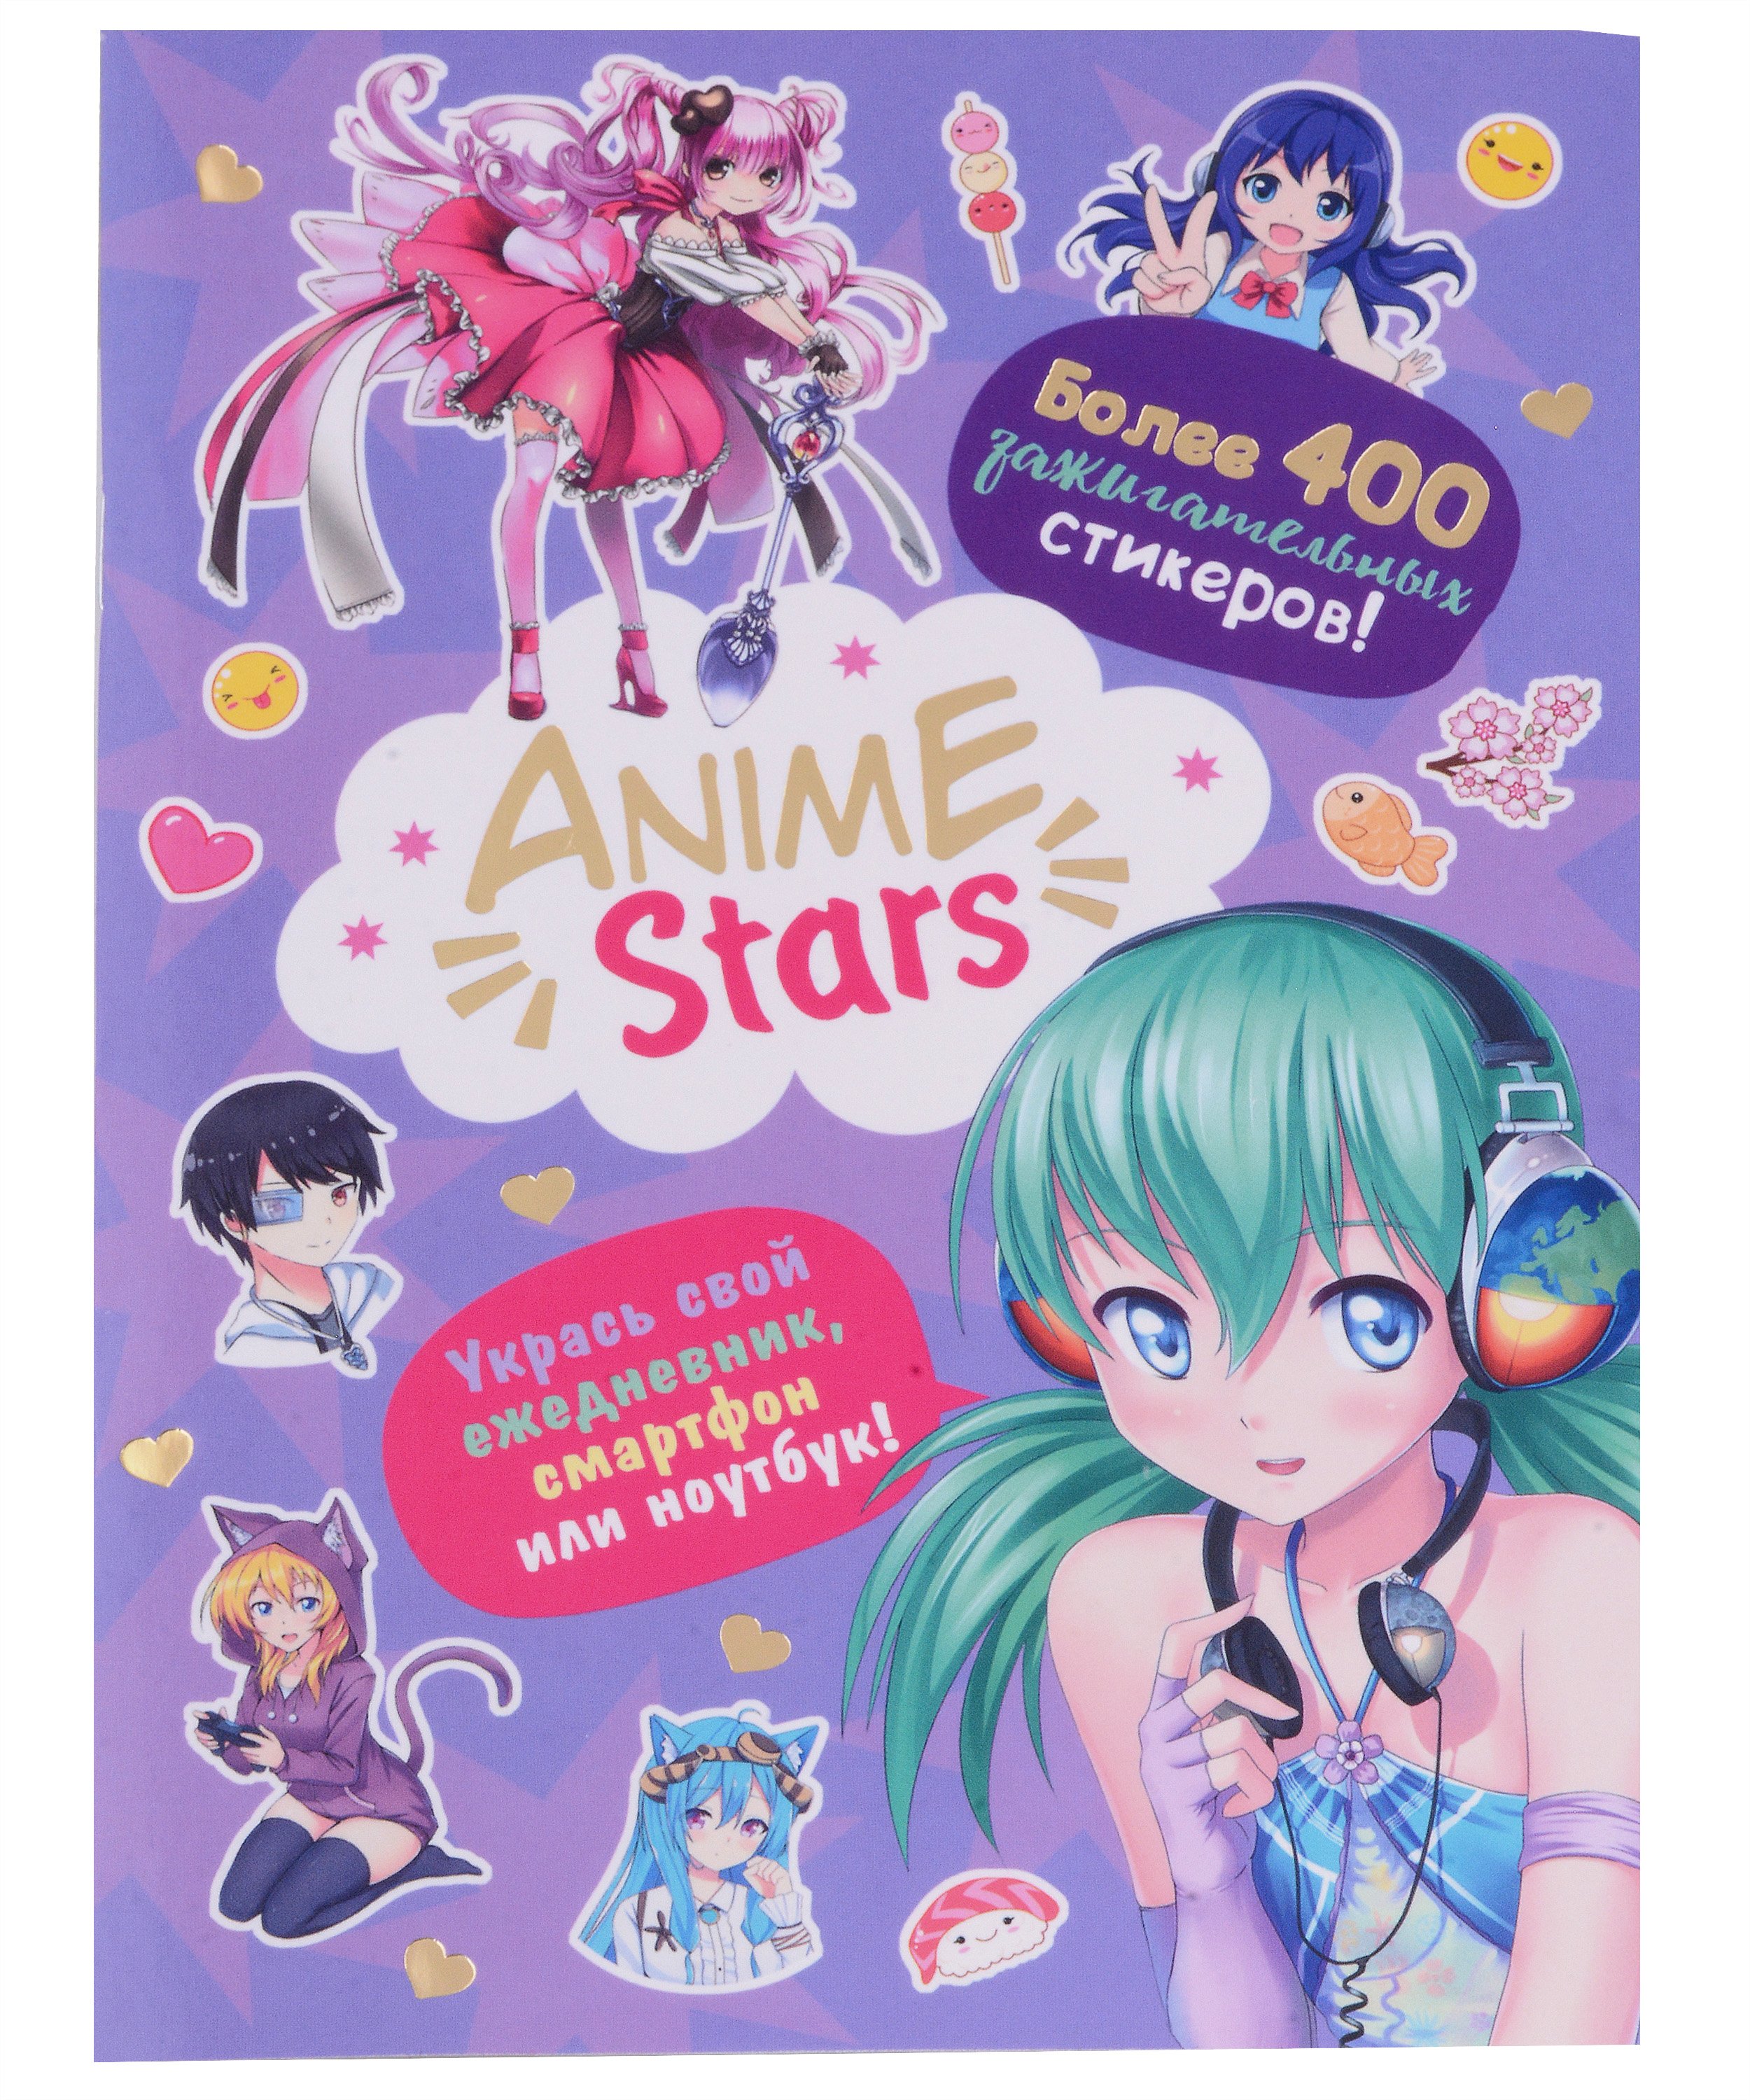  Anime Stars